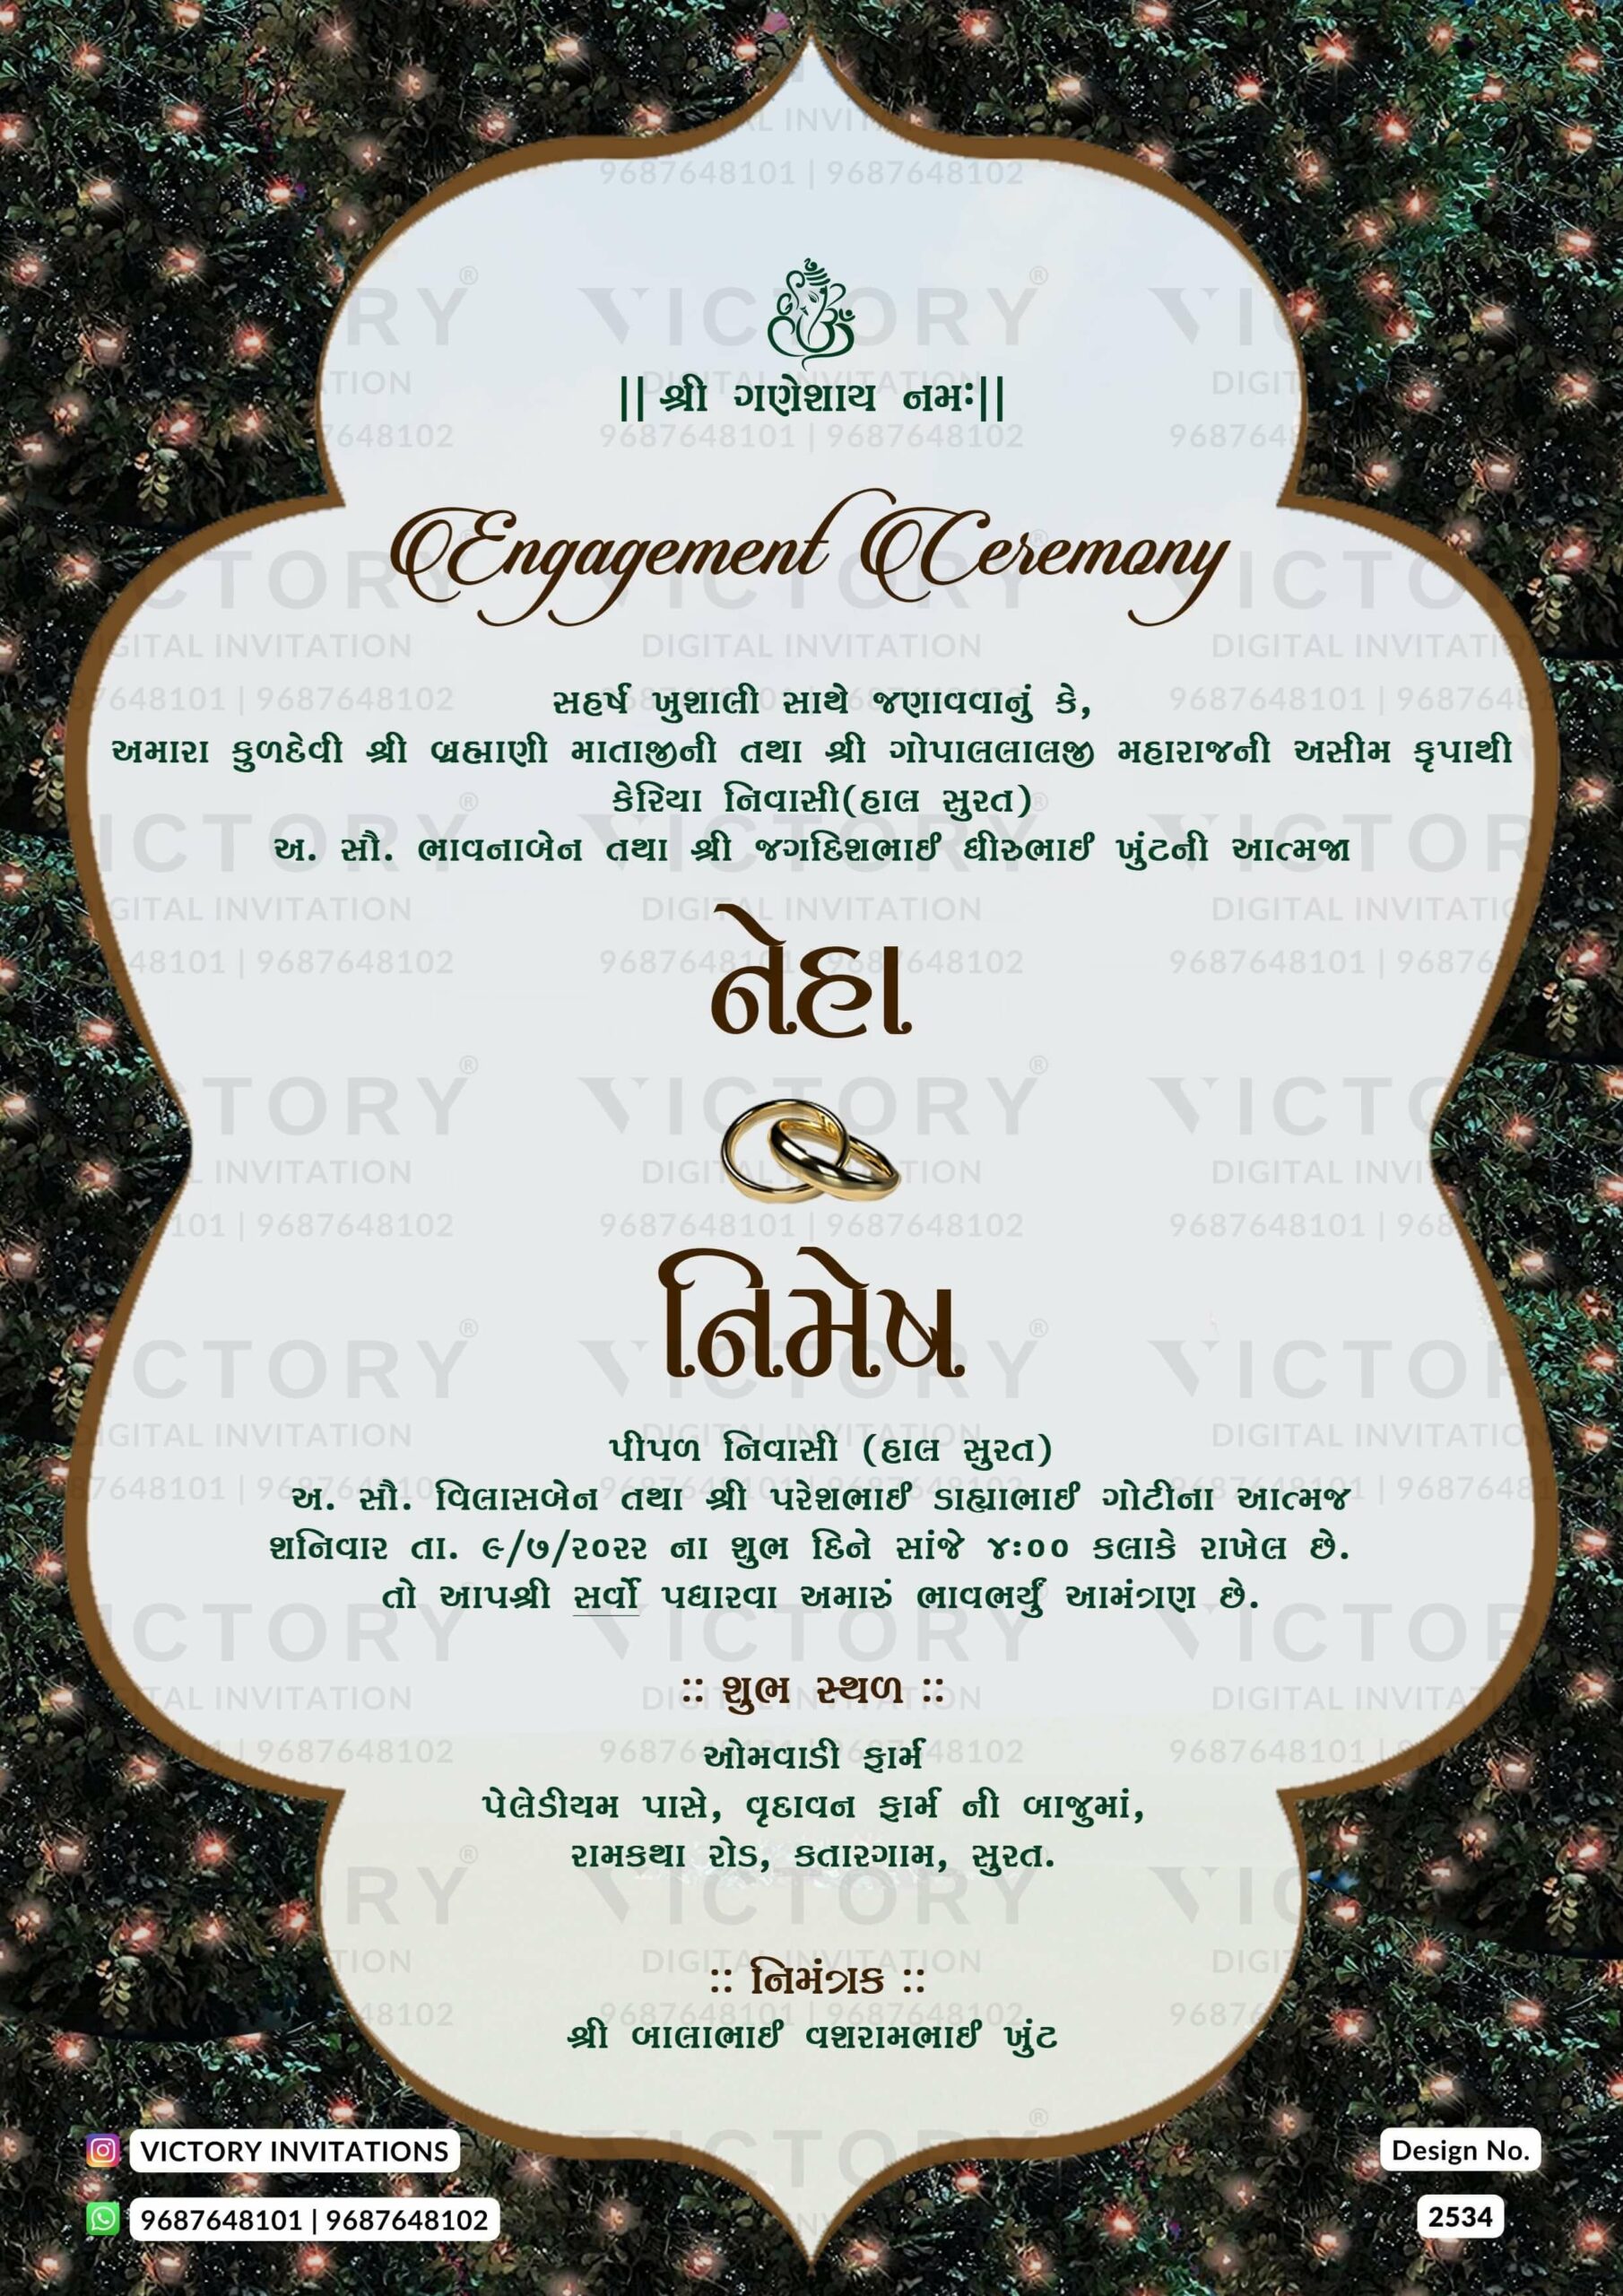 dark vintage theme digital engagement invitation card in Gujarati language design 2534